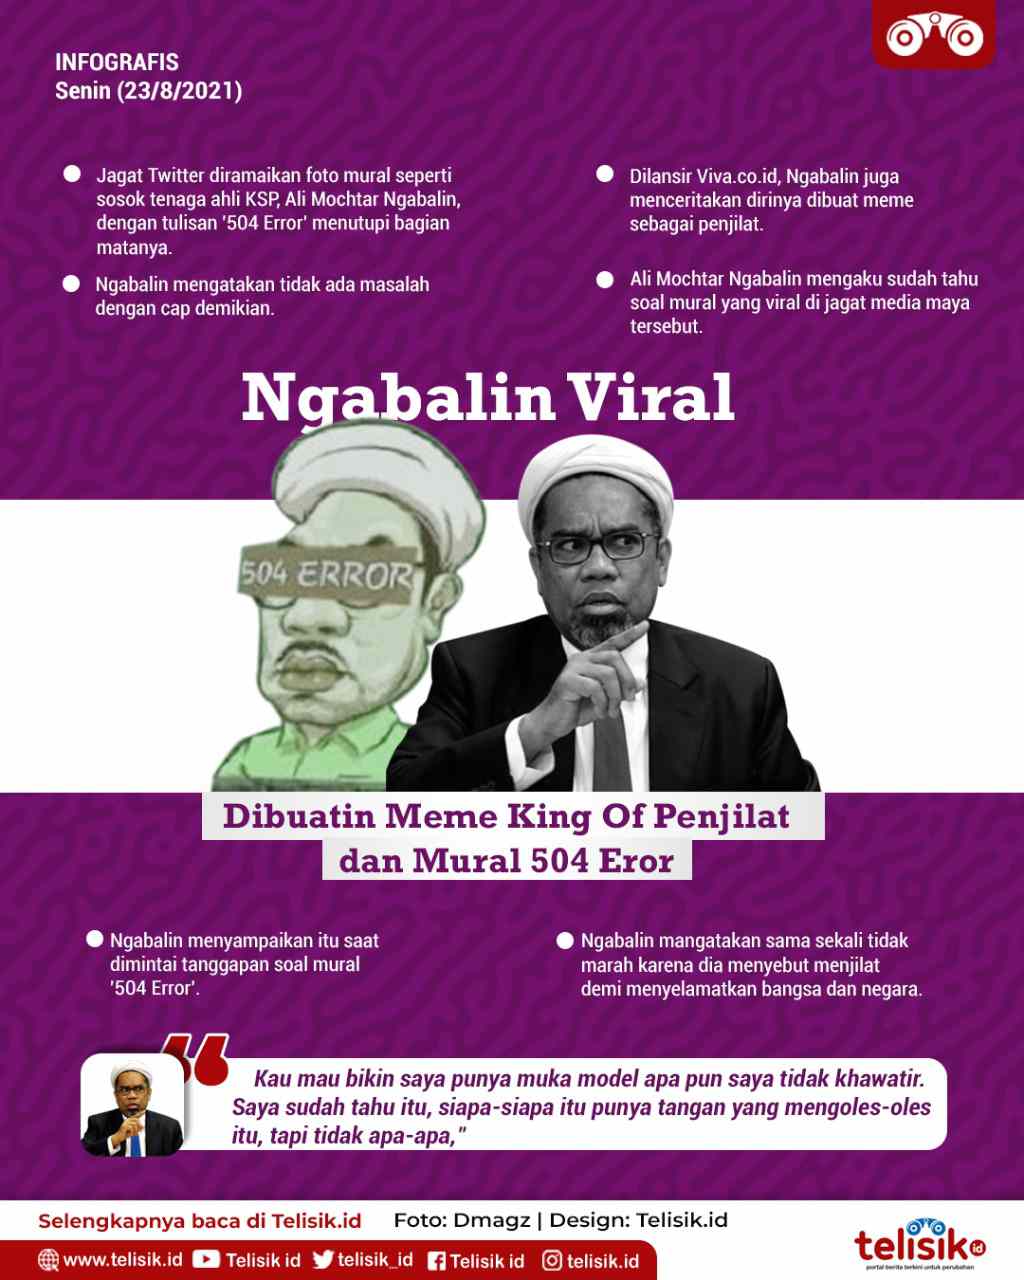 Infografis: Ngabalin Viral, Dibuatin Meme King Of Penjilat dan Mural 504 Eror